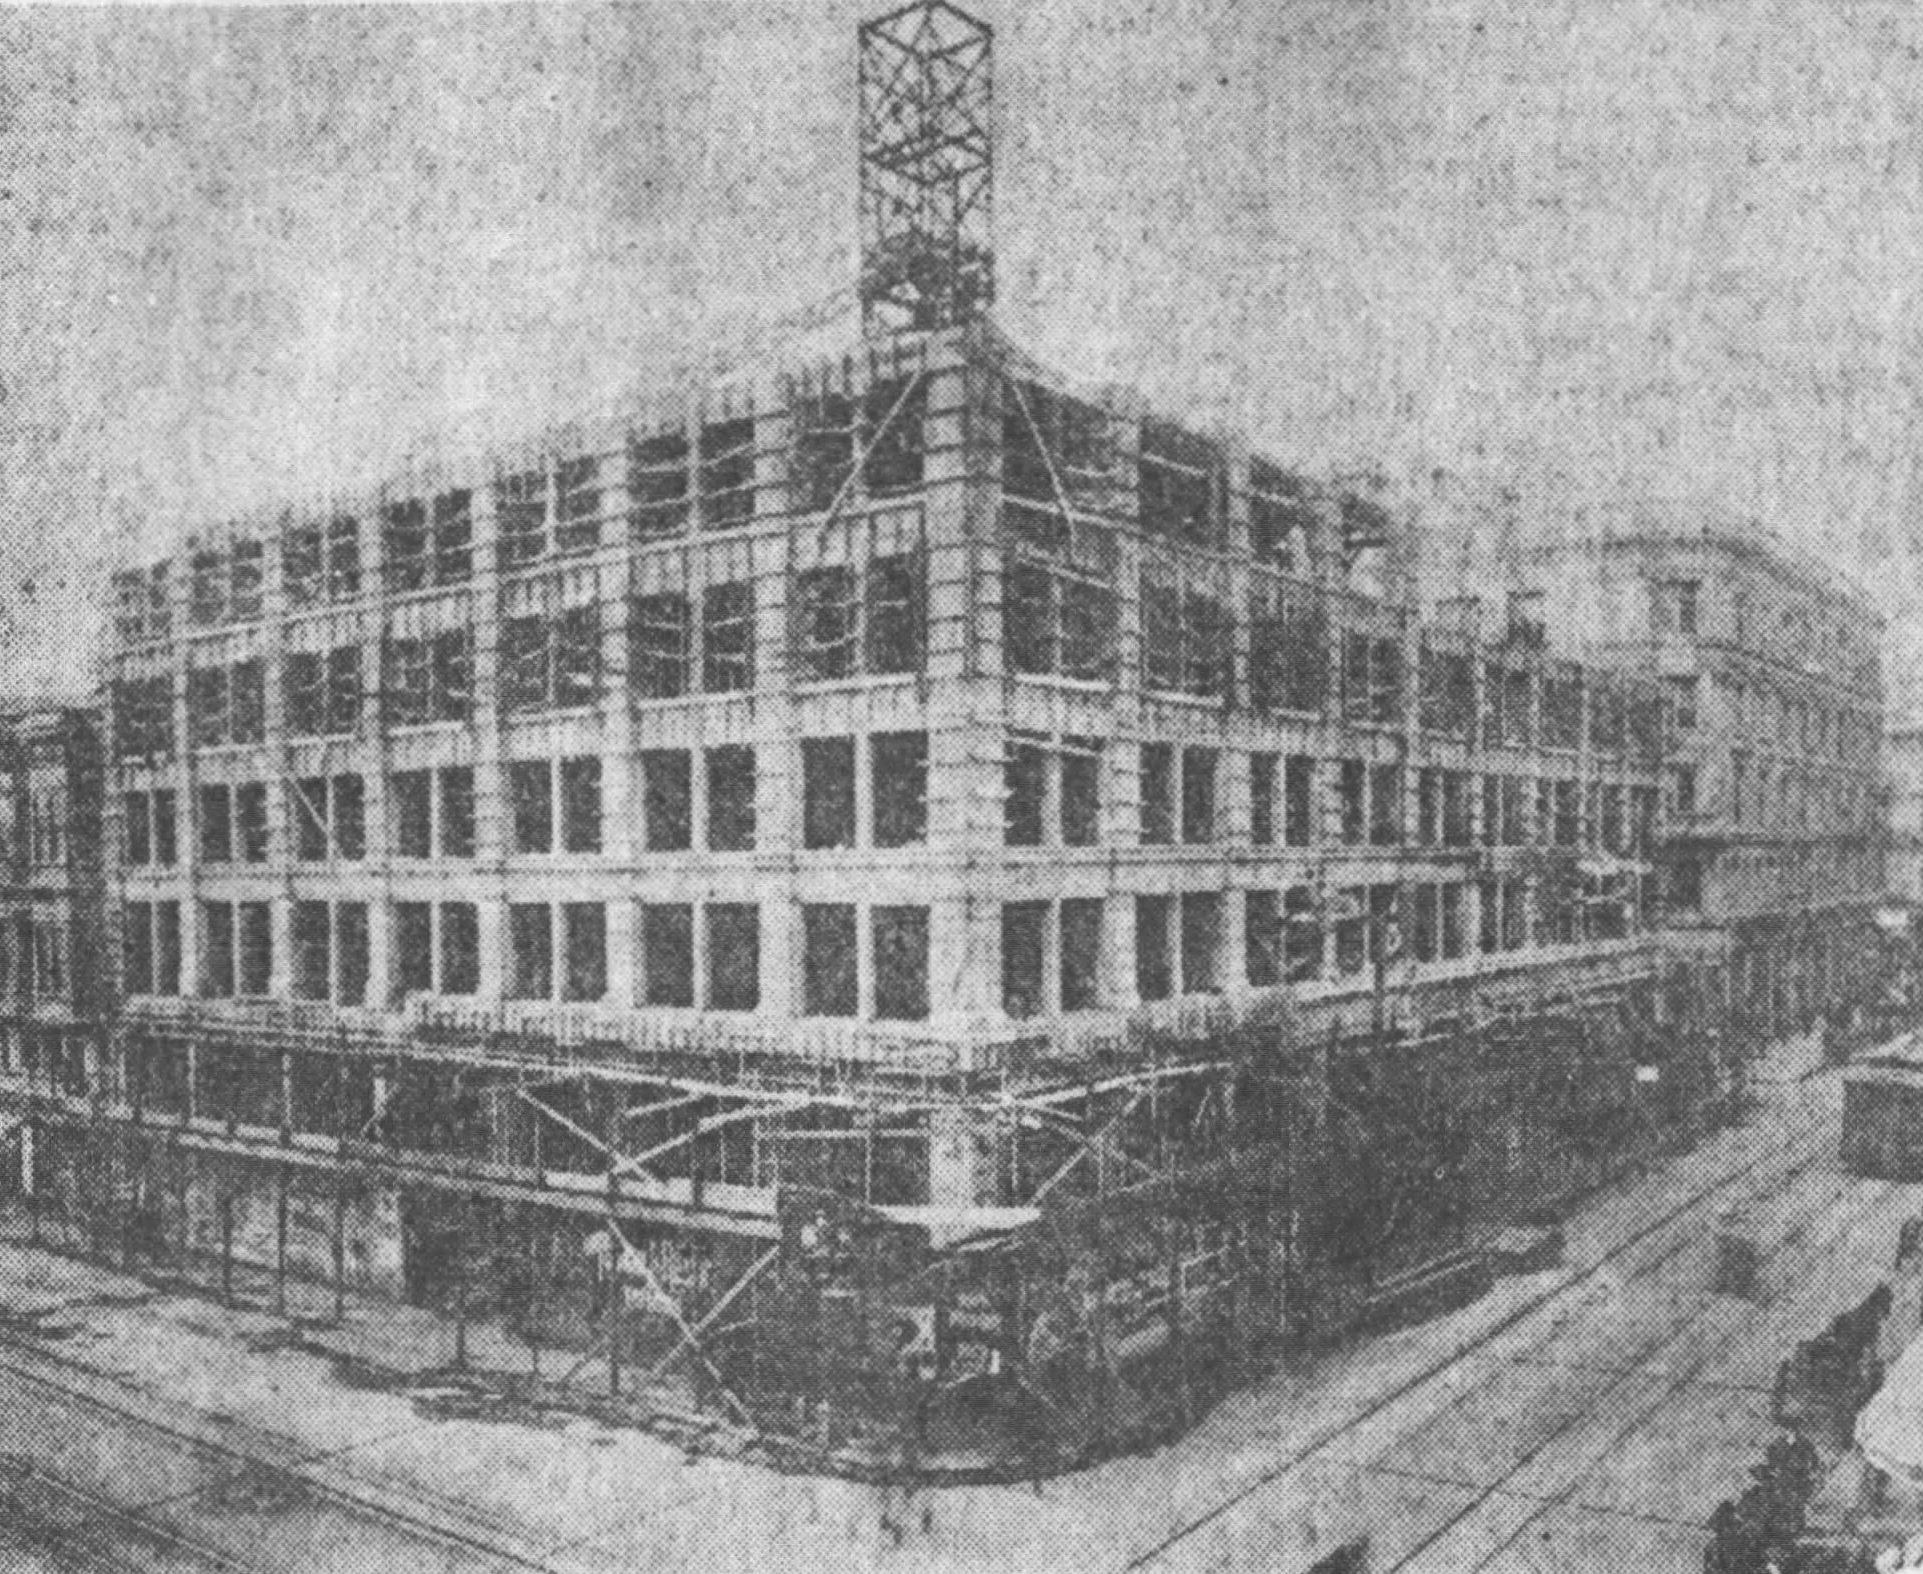 Higgins Building under construction, 1910